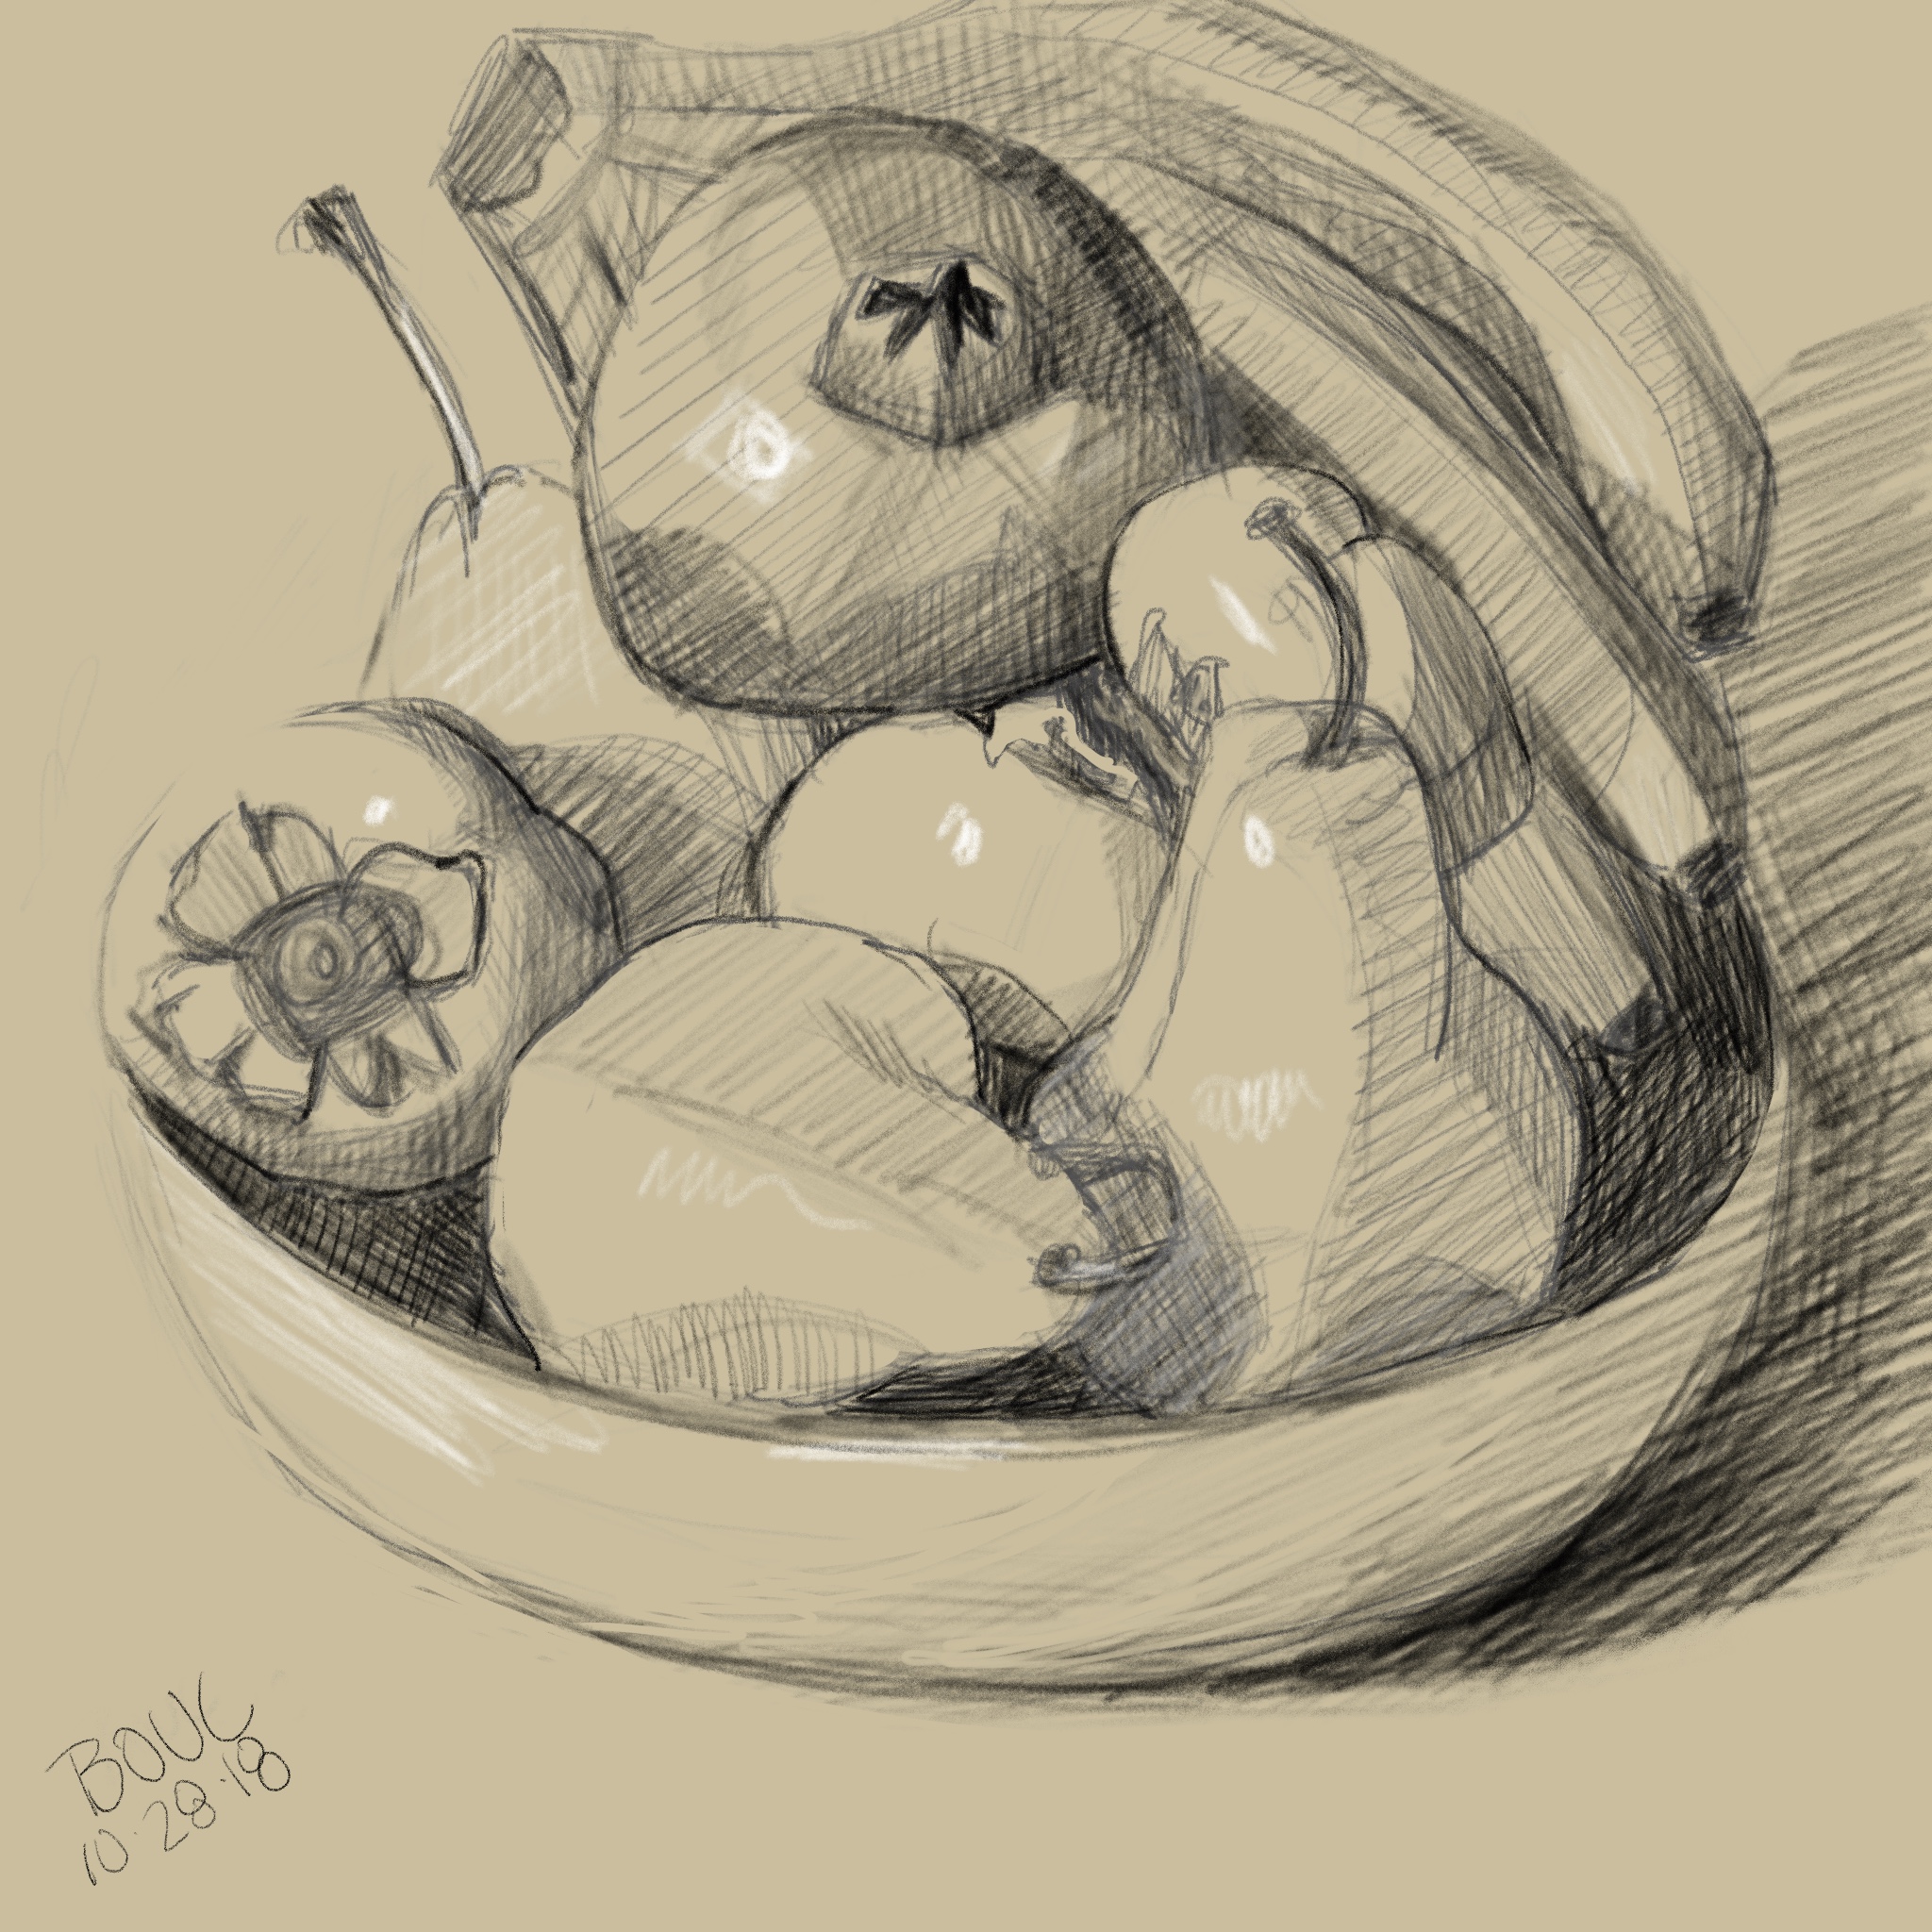 Bowl of Fruit on Toned Paper, Digital Sketch in Procreate